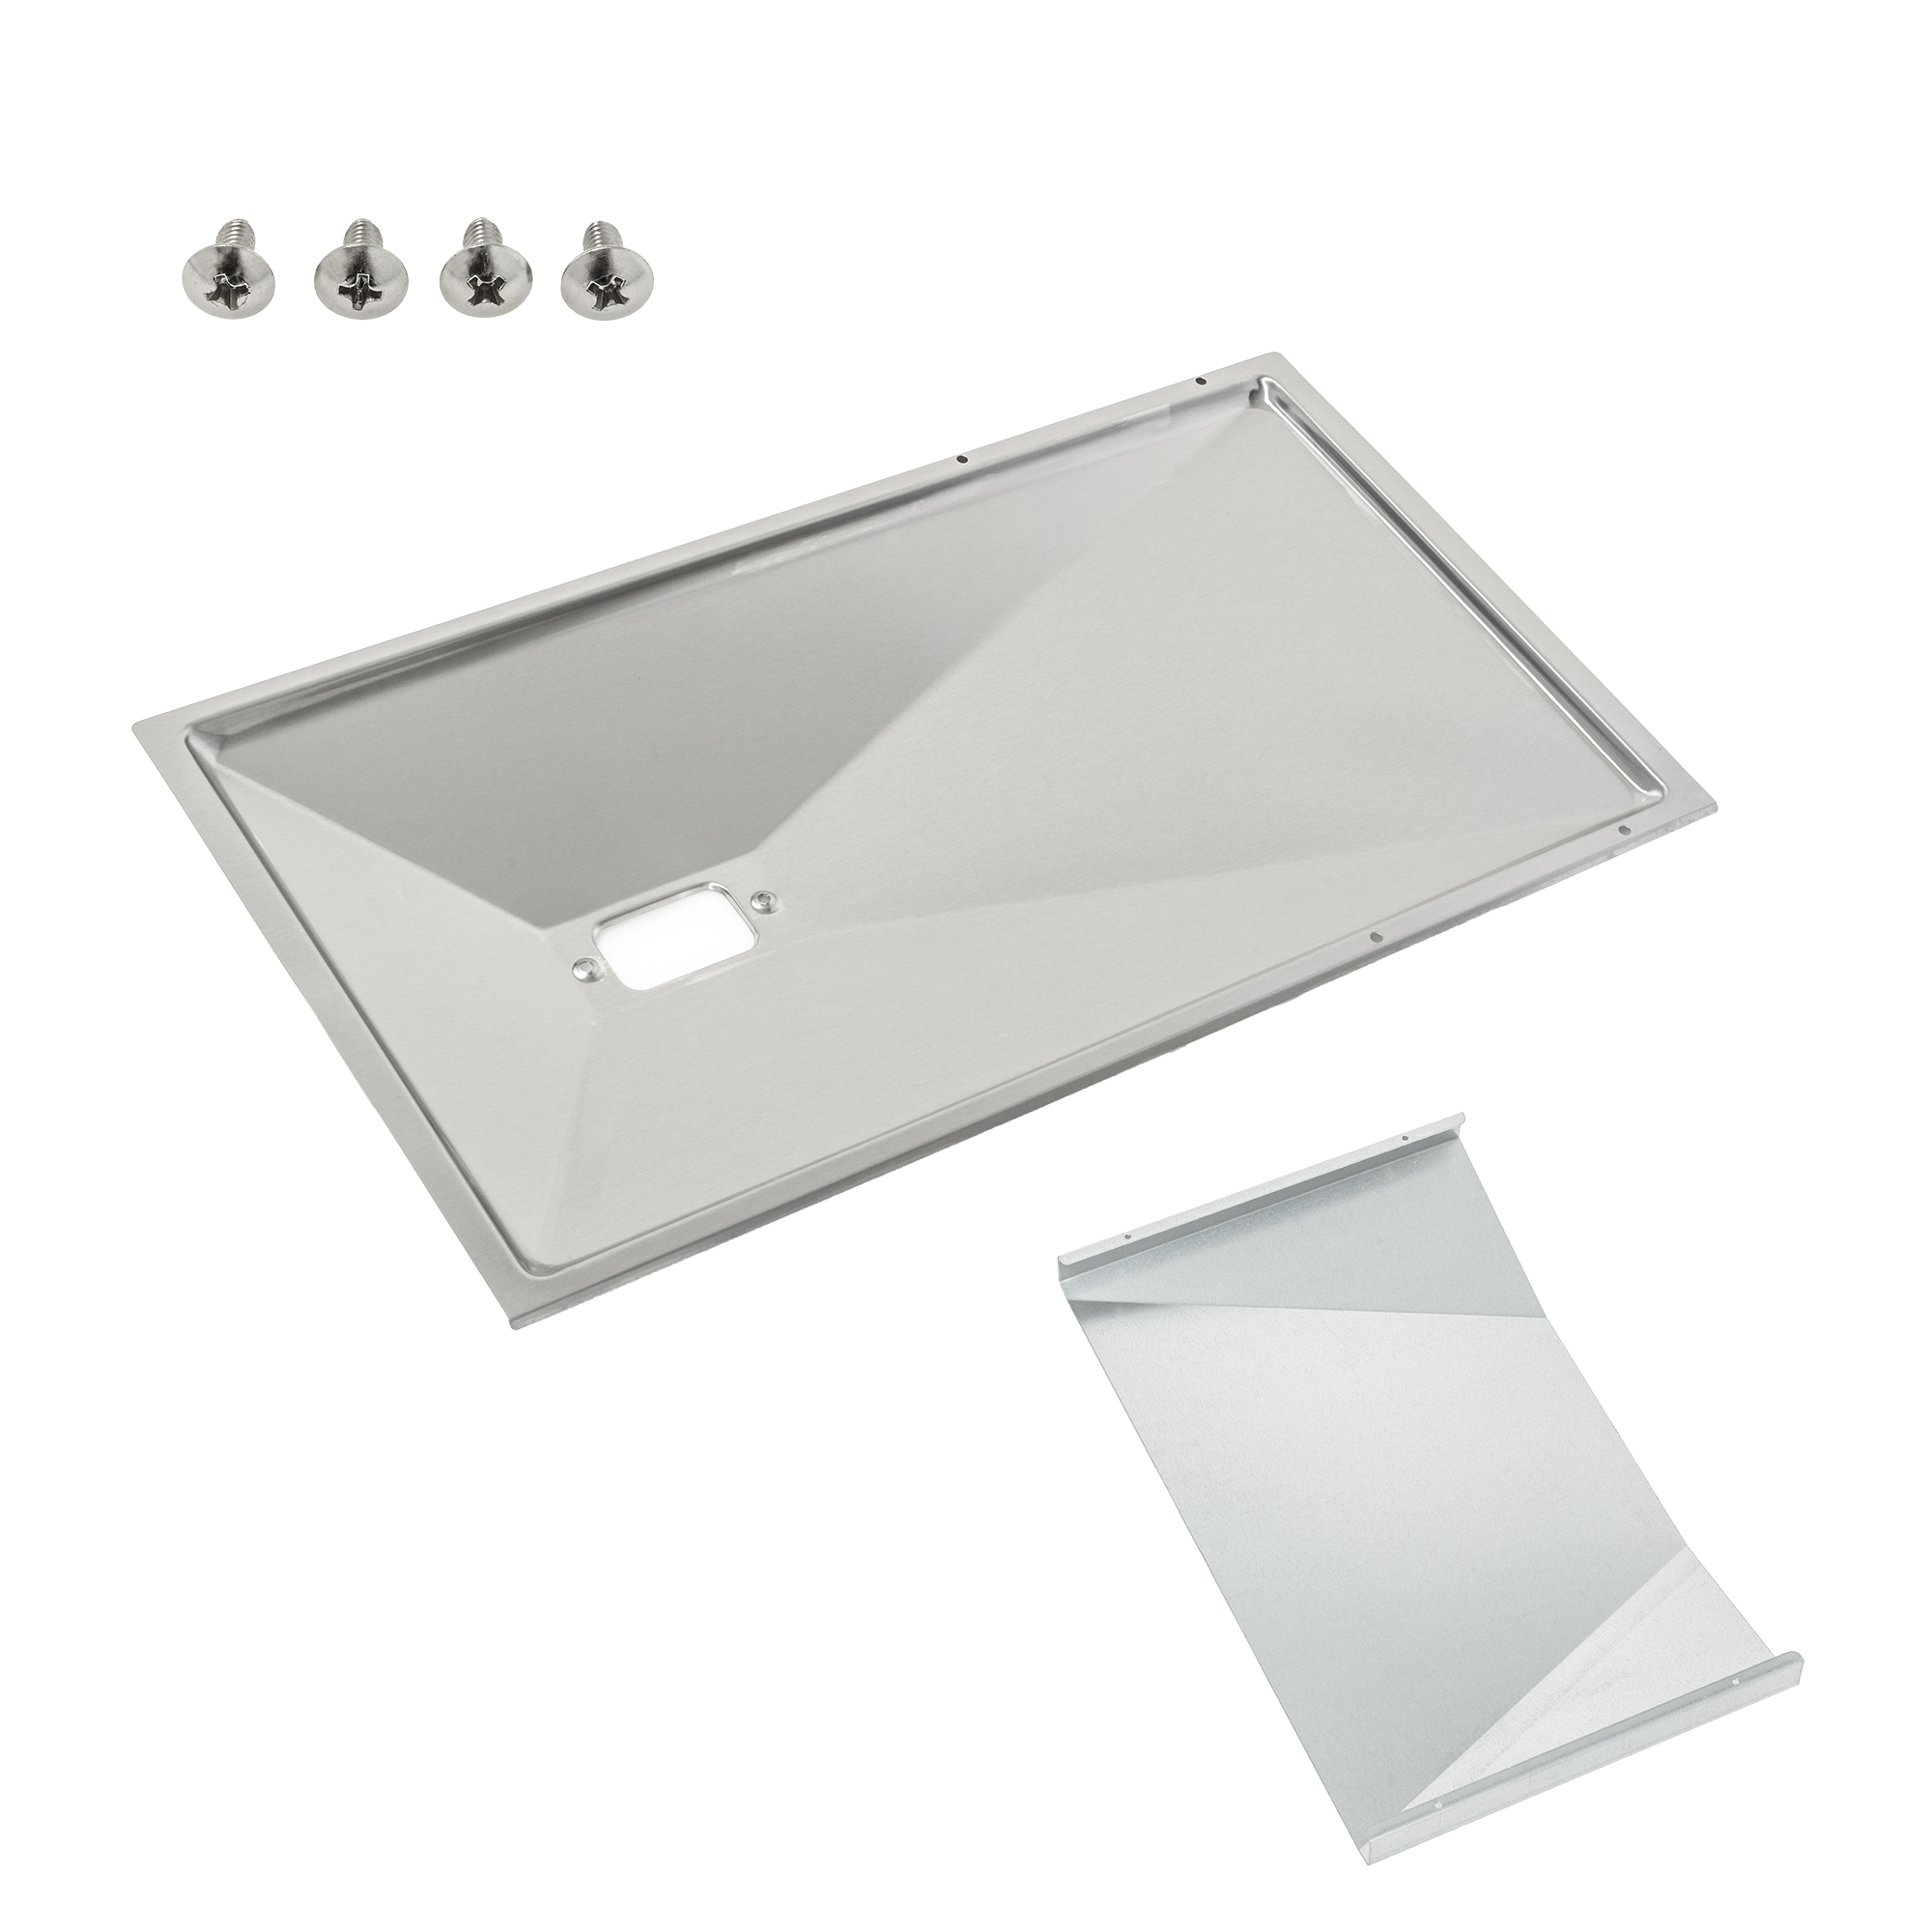 Grease tray Videro G4/G4-S stainless steel - w. heat insulation board (galvanized steel)